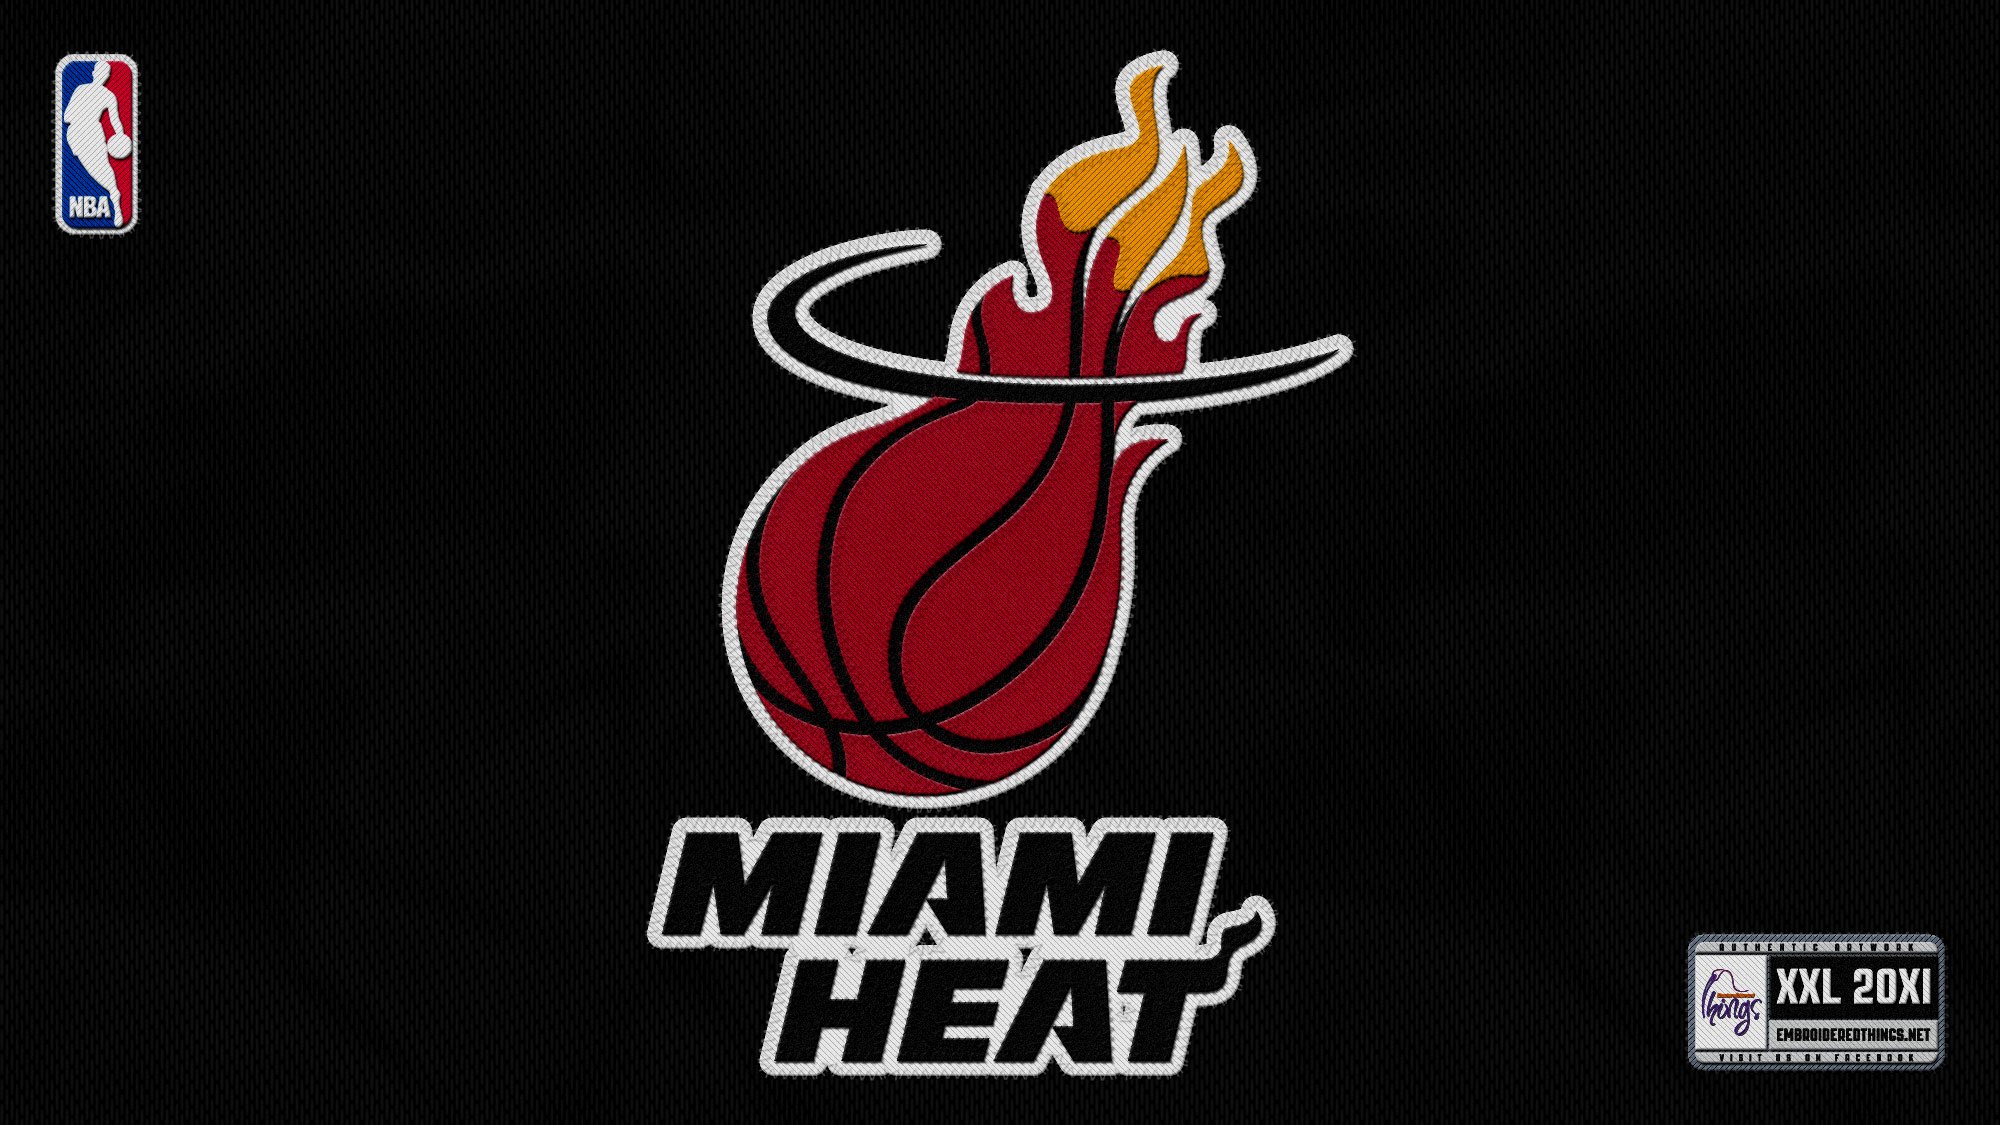 Miami Heat NBA Logo wallpapers55com   Best Wallpapers for PCs